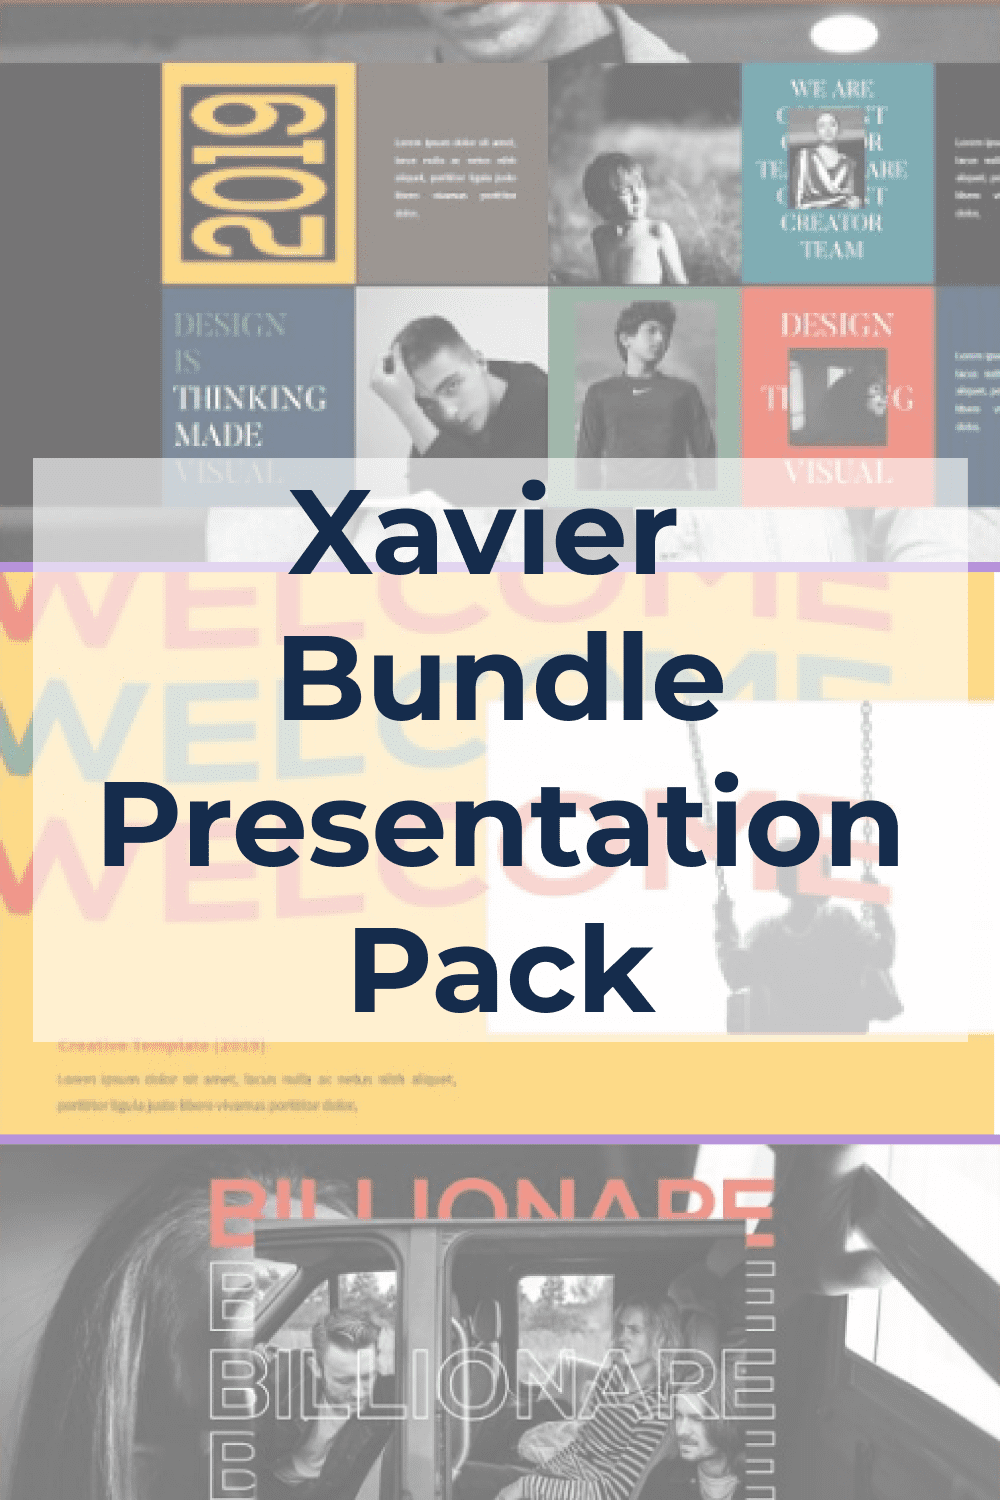 Xavier Bundle Presentation Pack Pinterest.